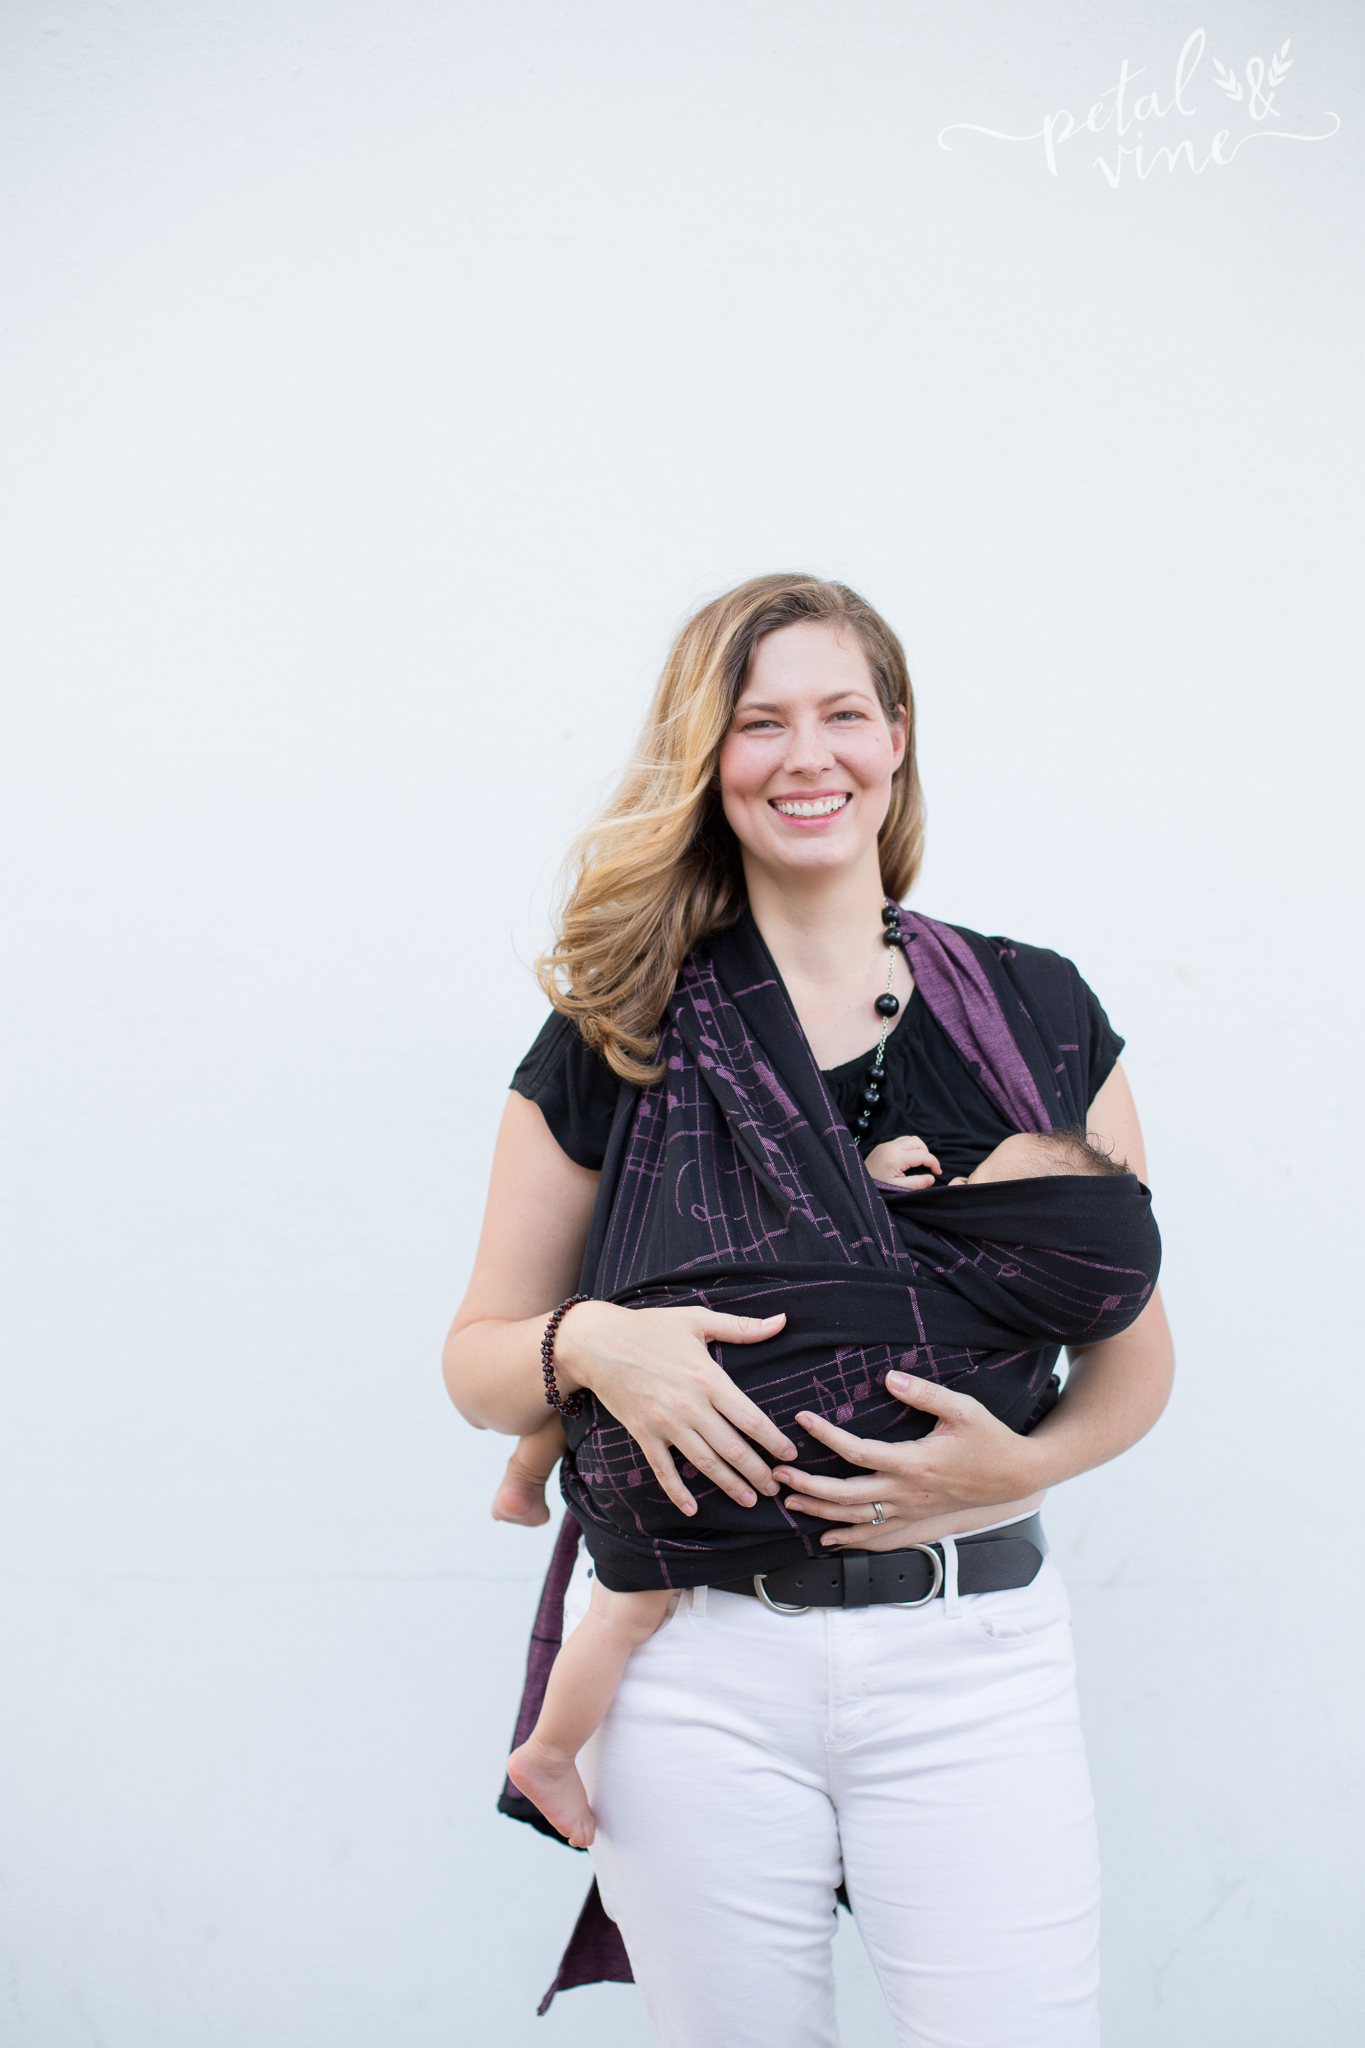 Cradle Carry Nursing Baby in a Wrap